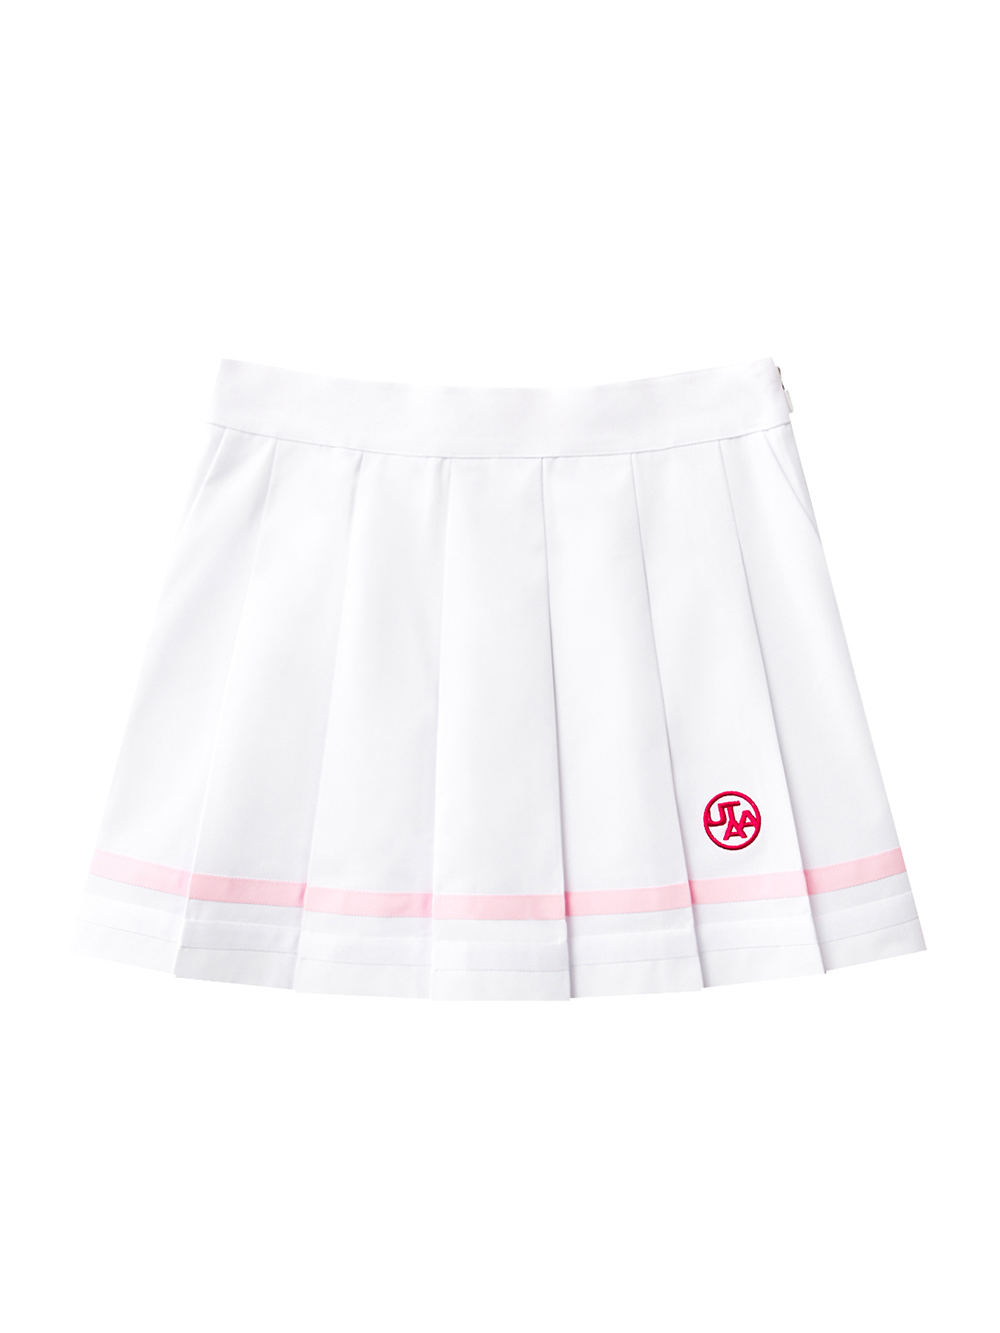 UTAA Dual Tape Mix Flare Skirt  : White (UD2SKF171WH)